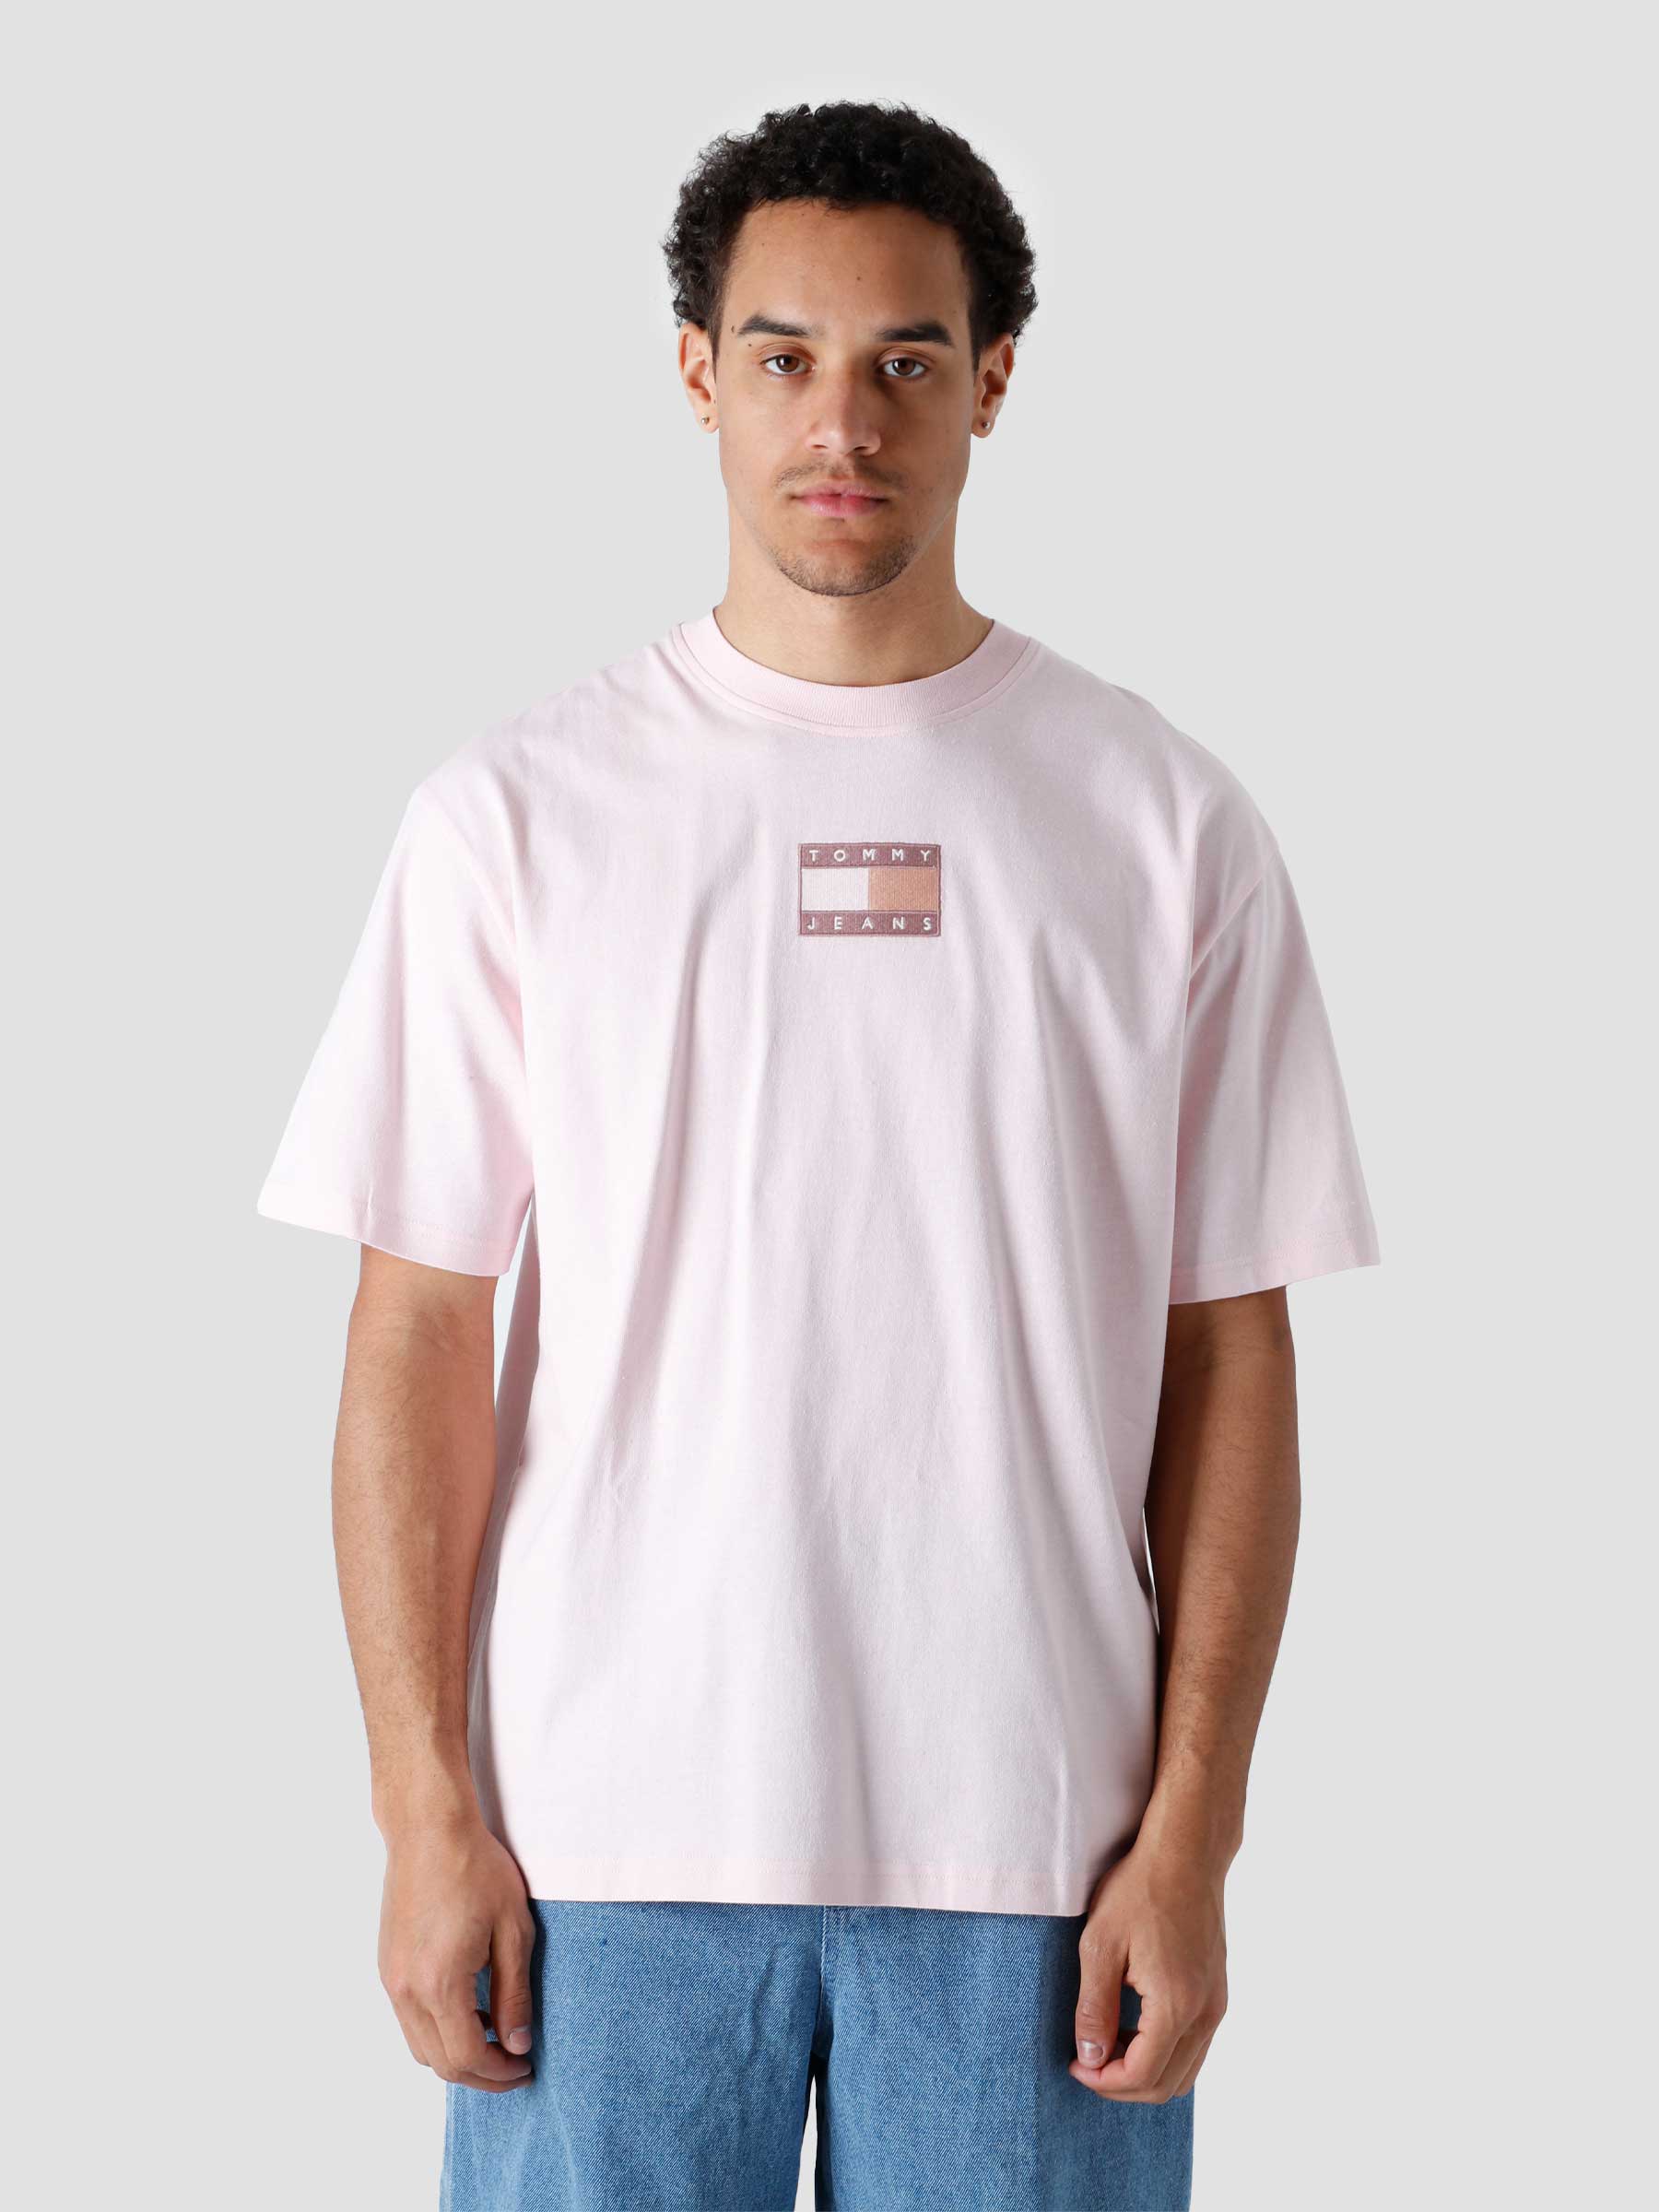 Freshcotton Graphic TJM Pink Broadway - Jeans Best T-Shirt Tommy